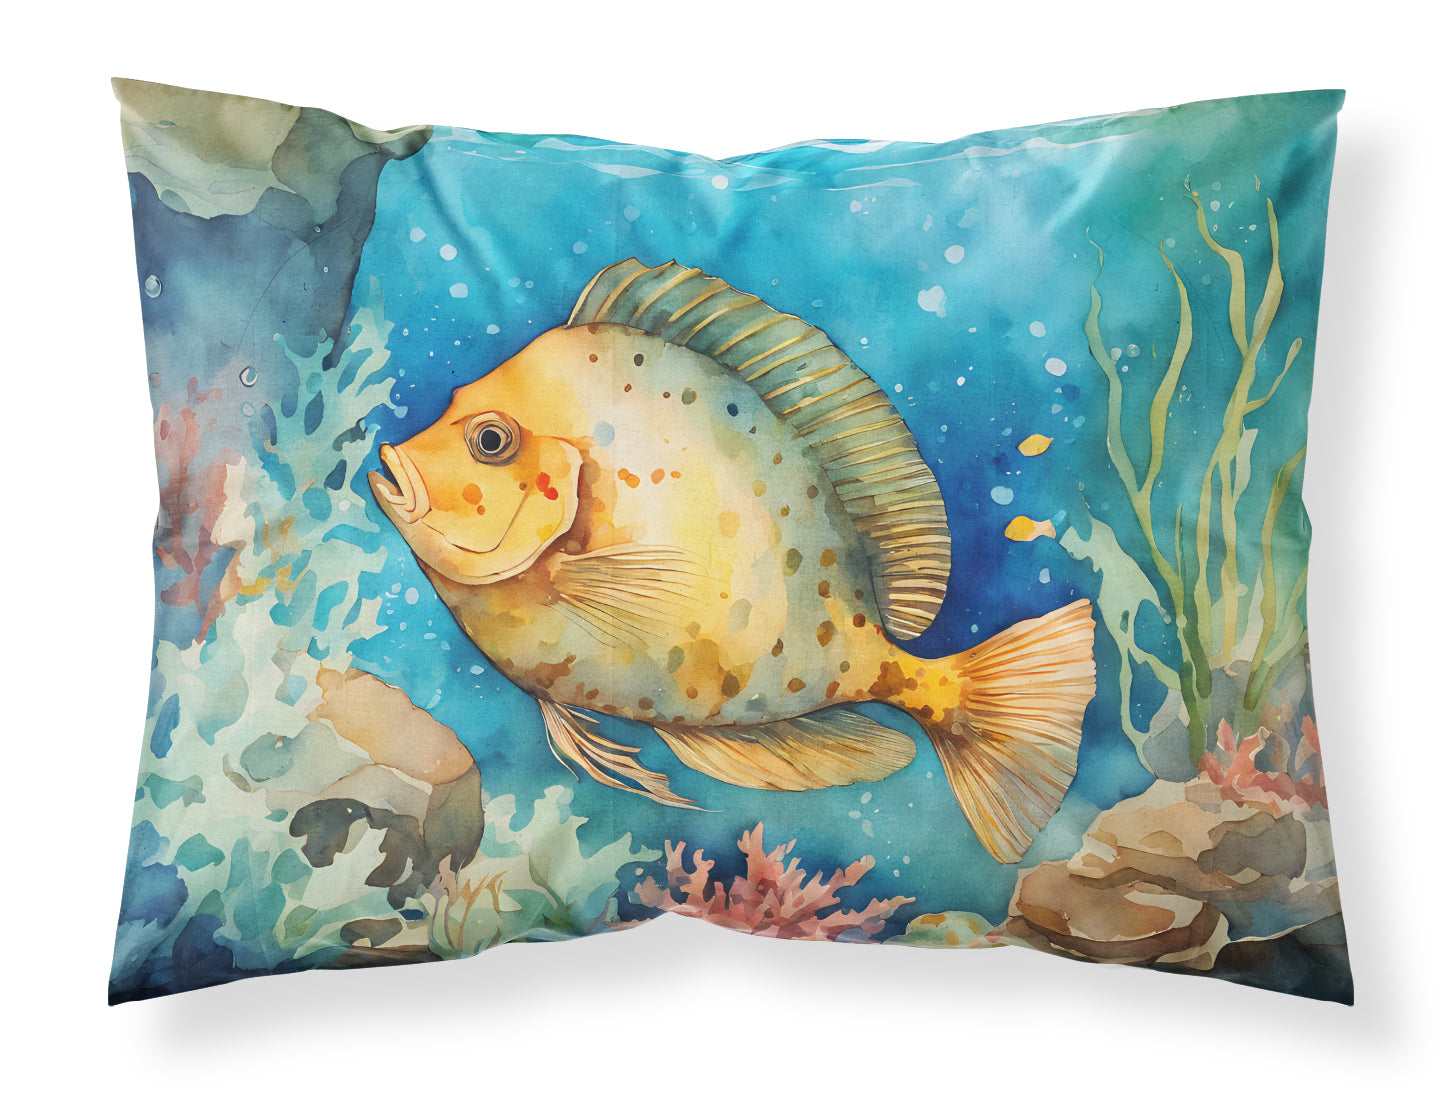 Buy this Flounder Standard Pillowcase